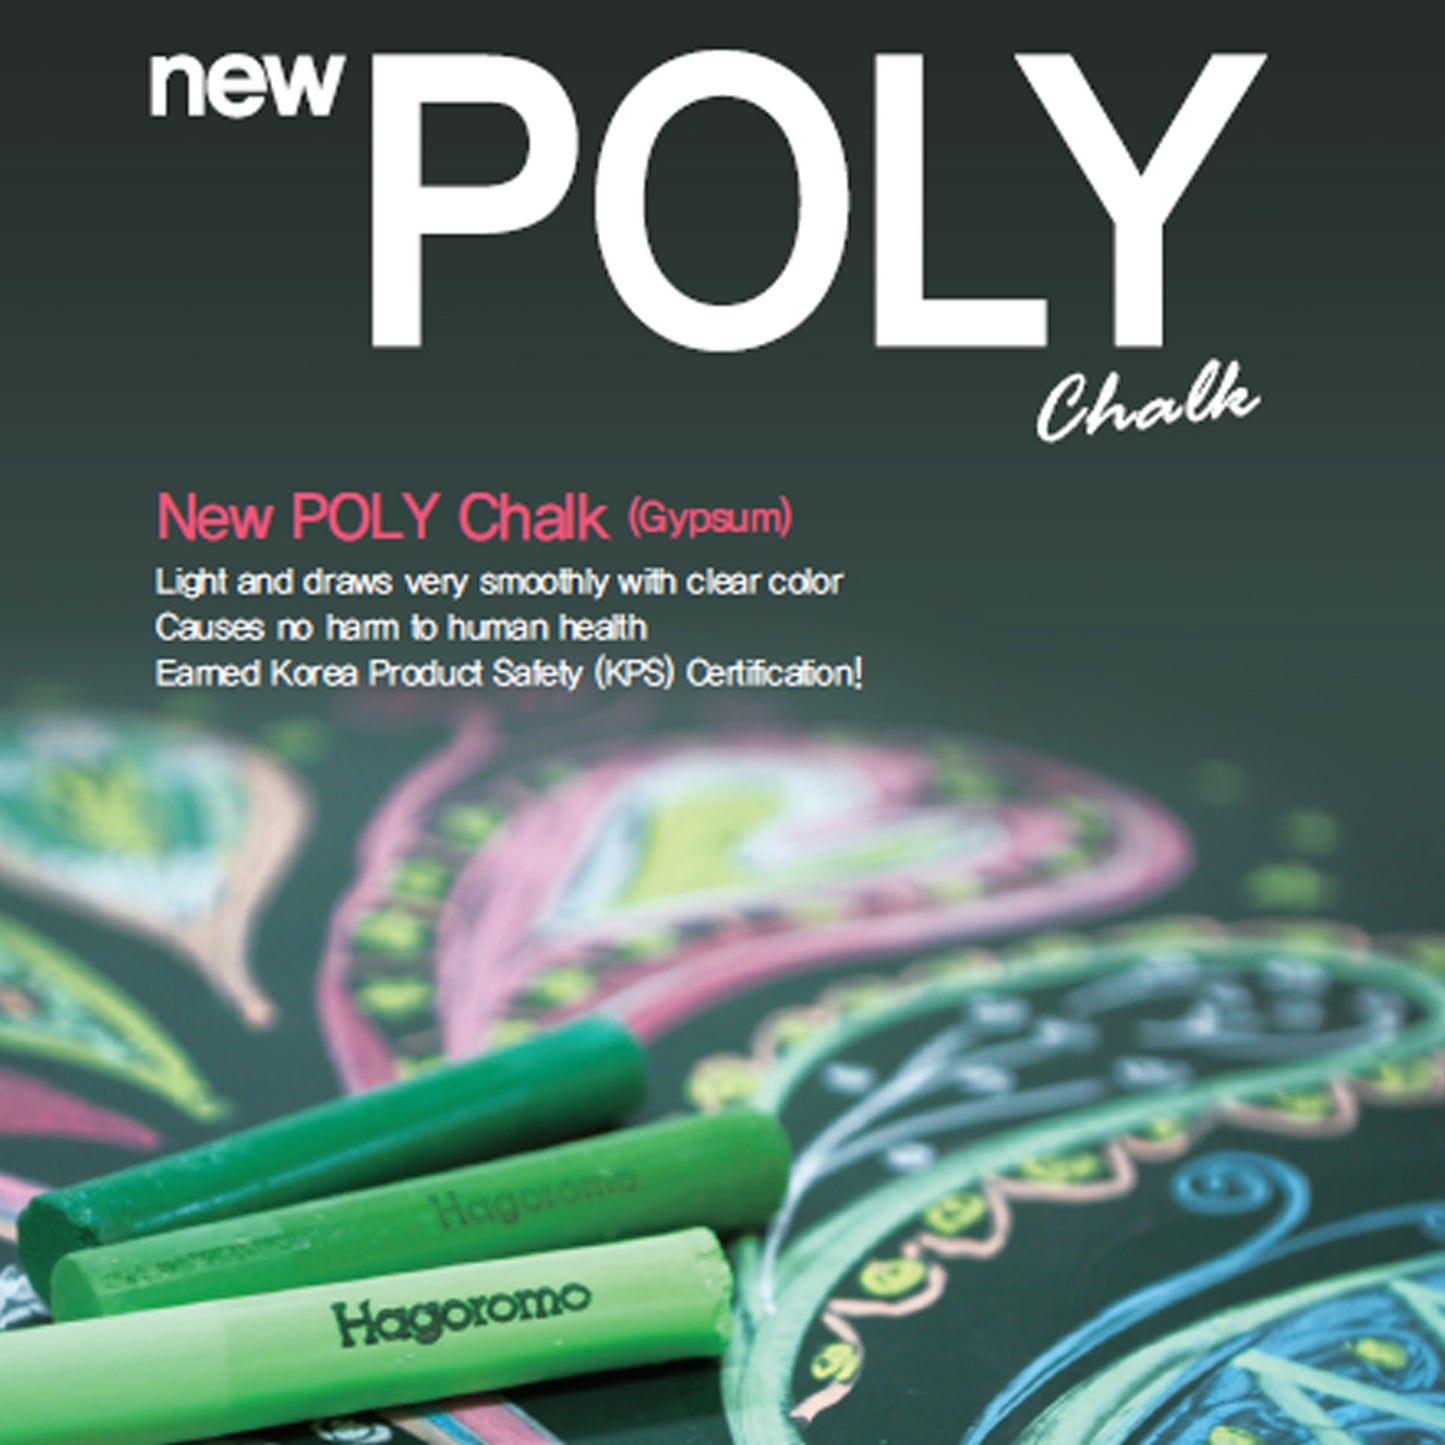 New Poly Green 100pcs 1LargeBox (30Box 3,000pcs)